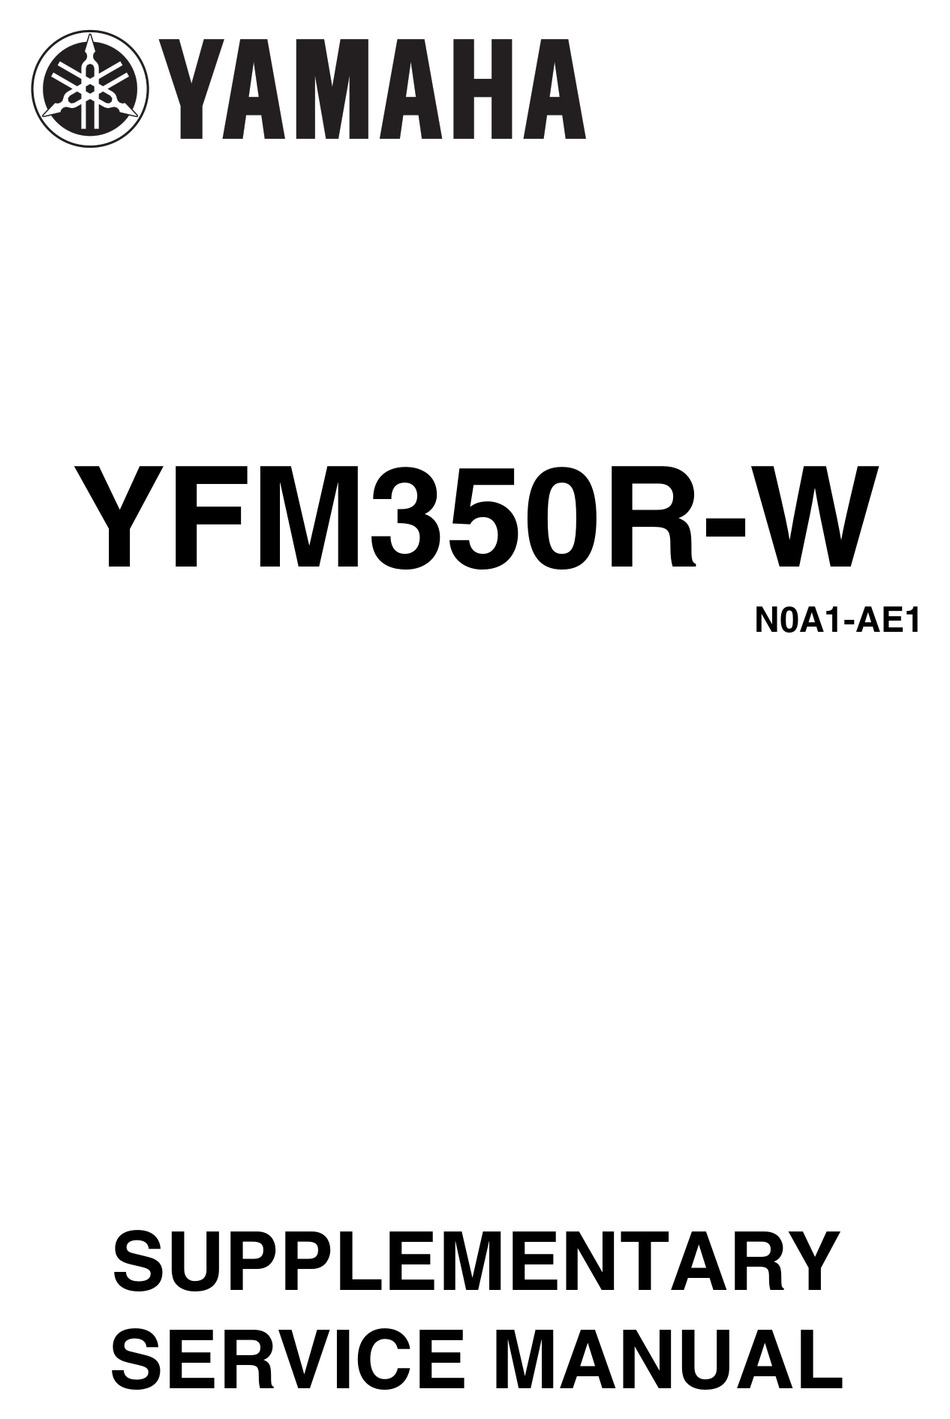 Yamaha Yfm350r W Supplementary Service Manual Pdf Download Manualslib